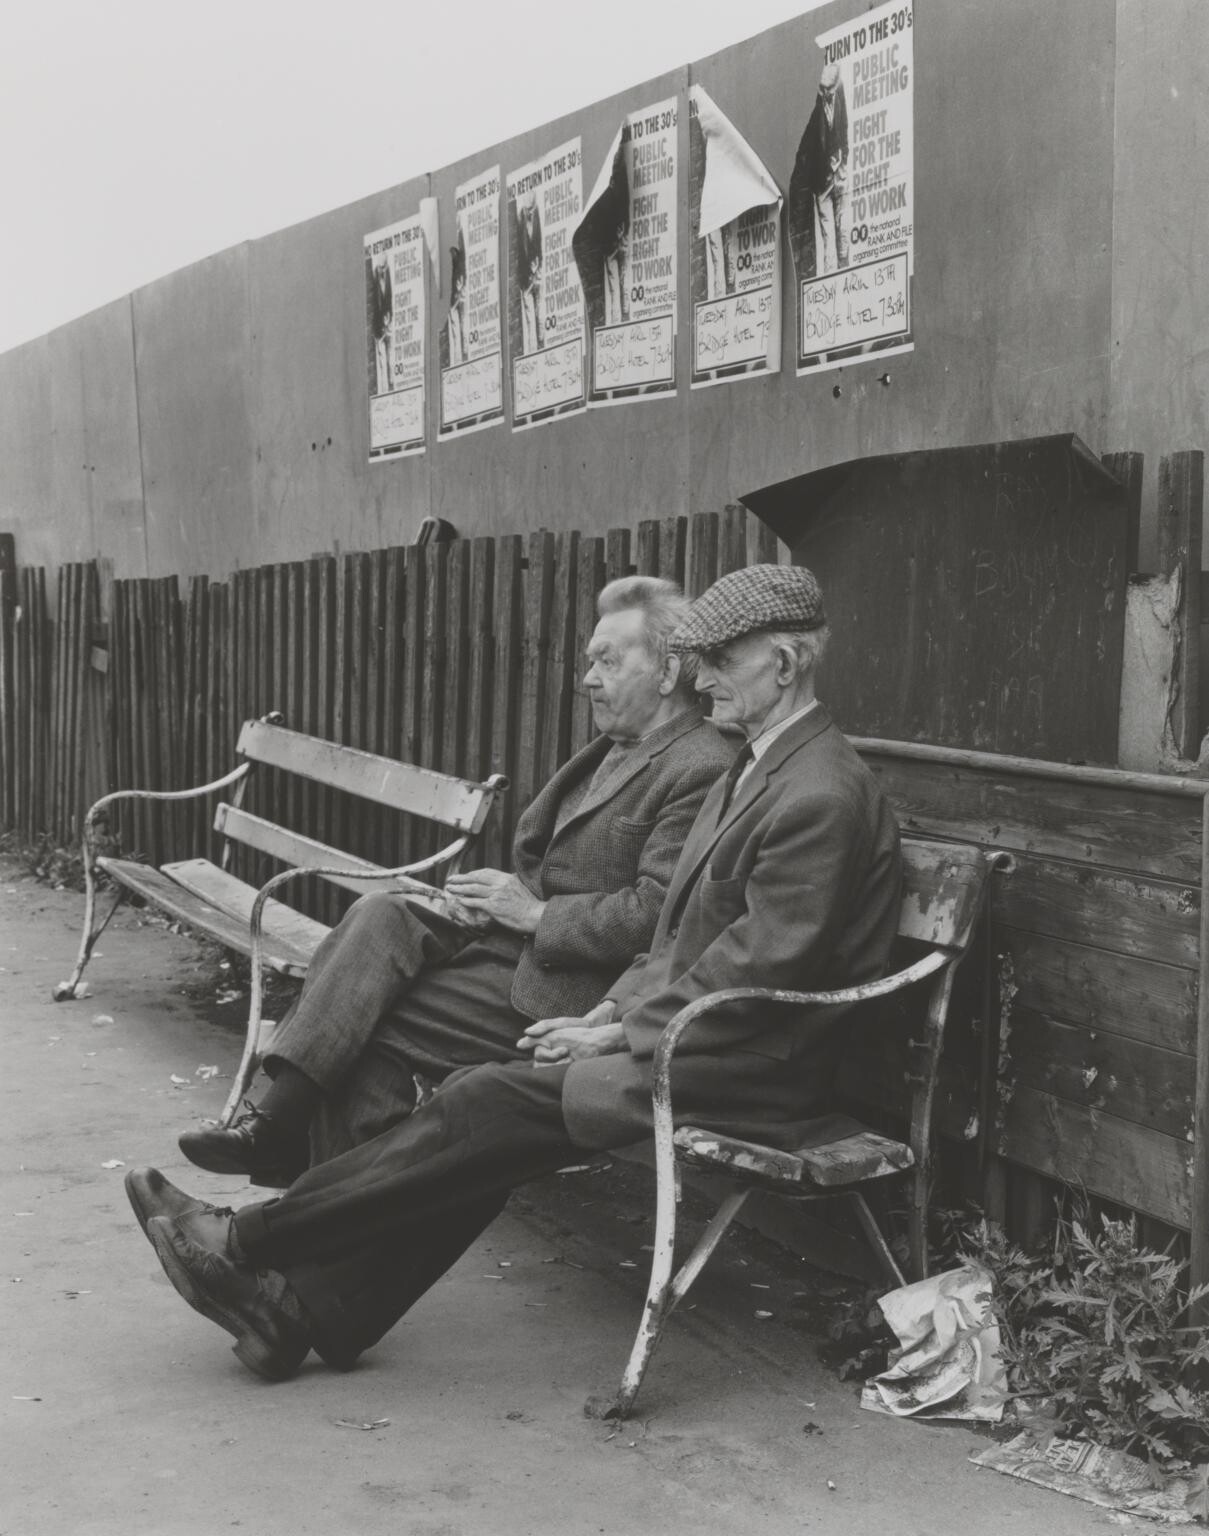 Двое мужчин на скамейке, Уоллсенд, Тайнсайд, июль 1975 года. Фотограф Крис Киллип